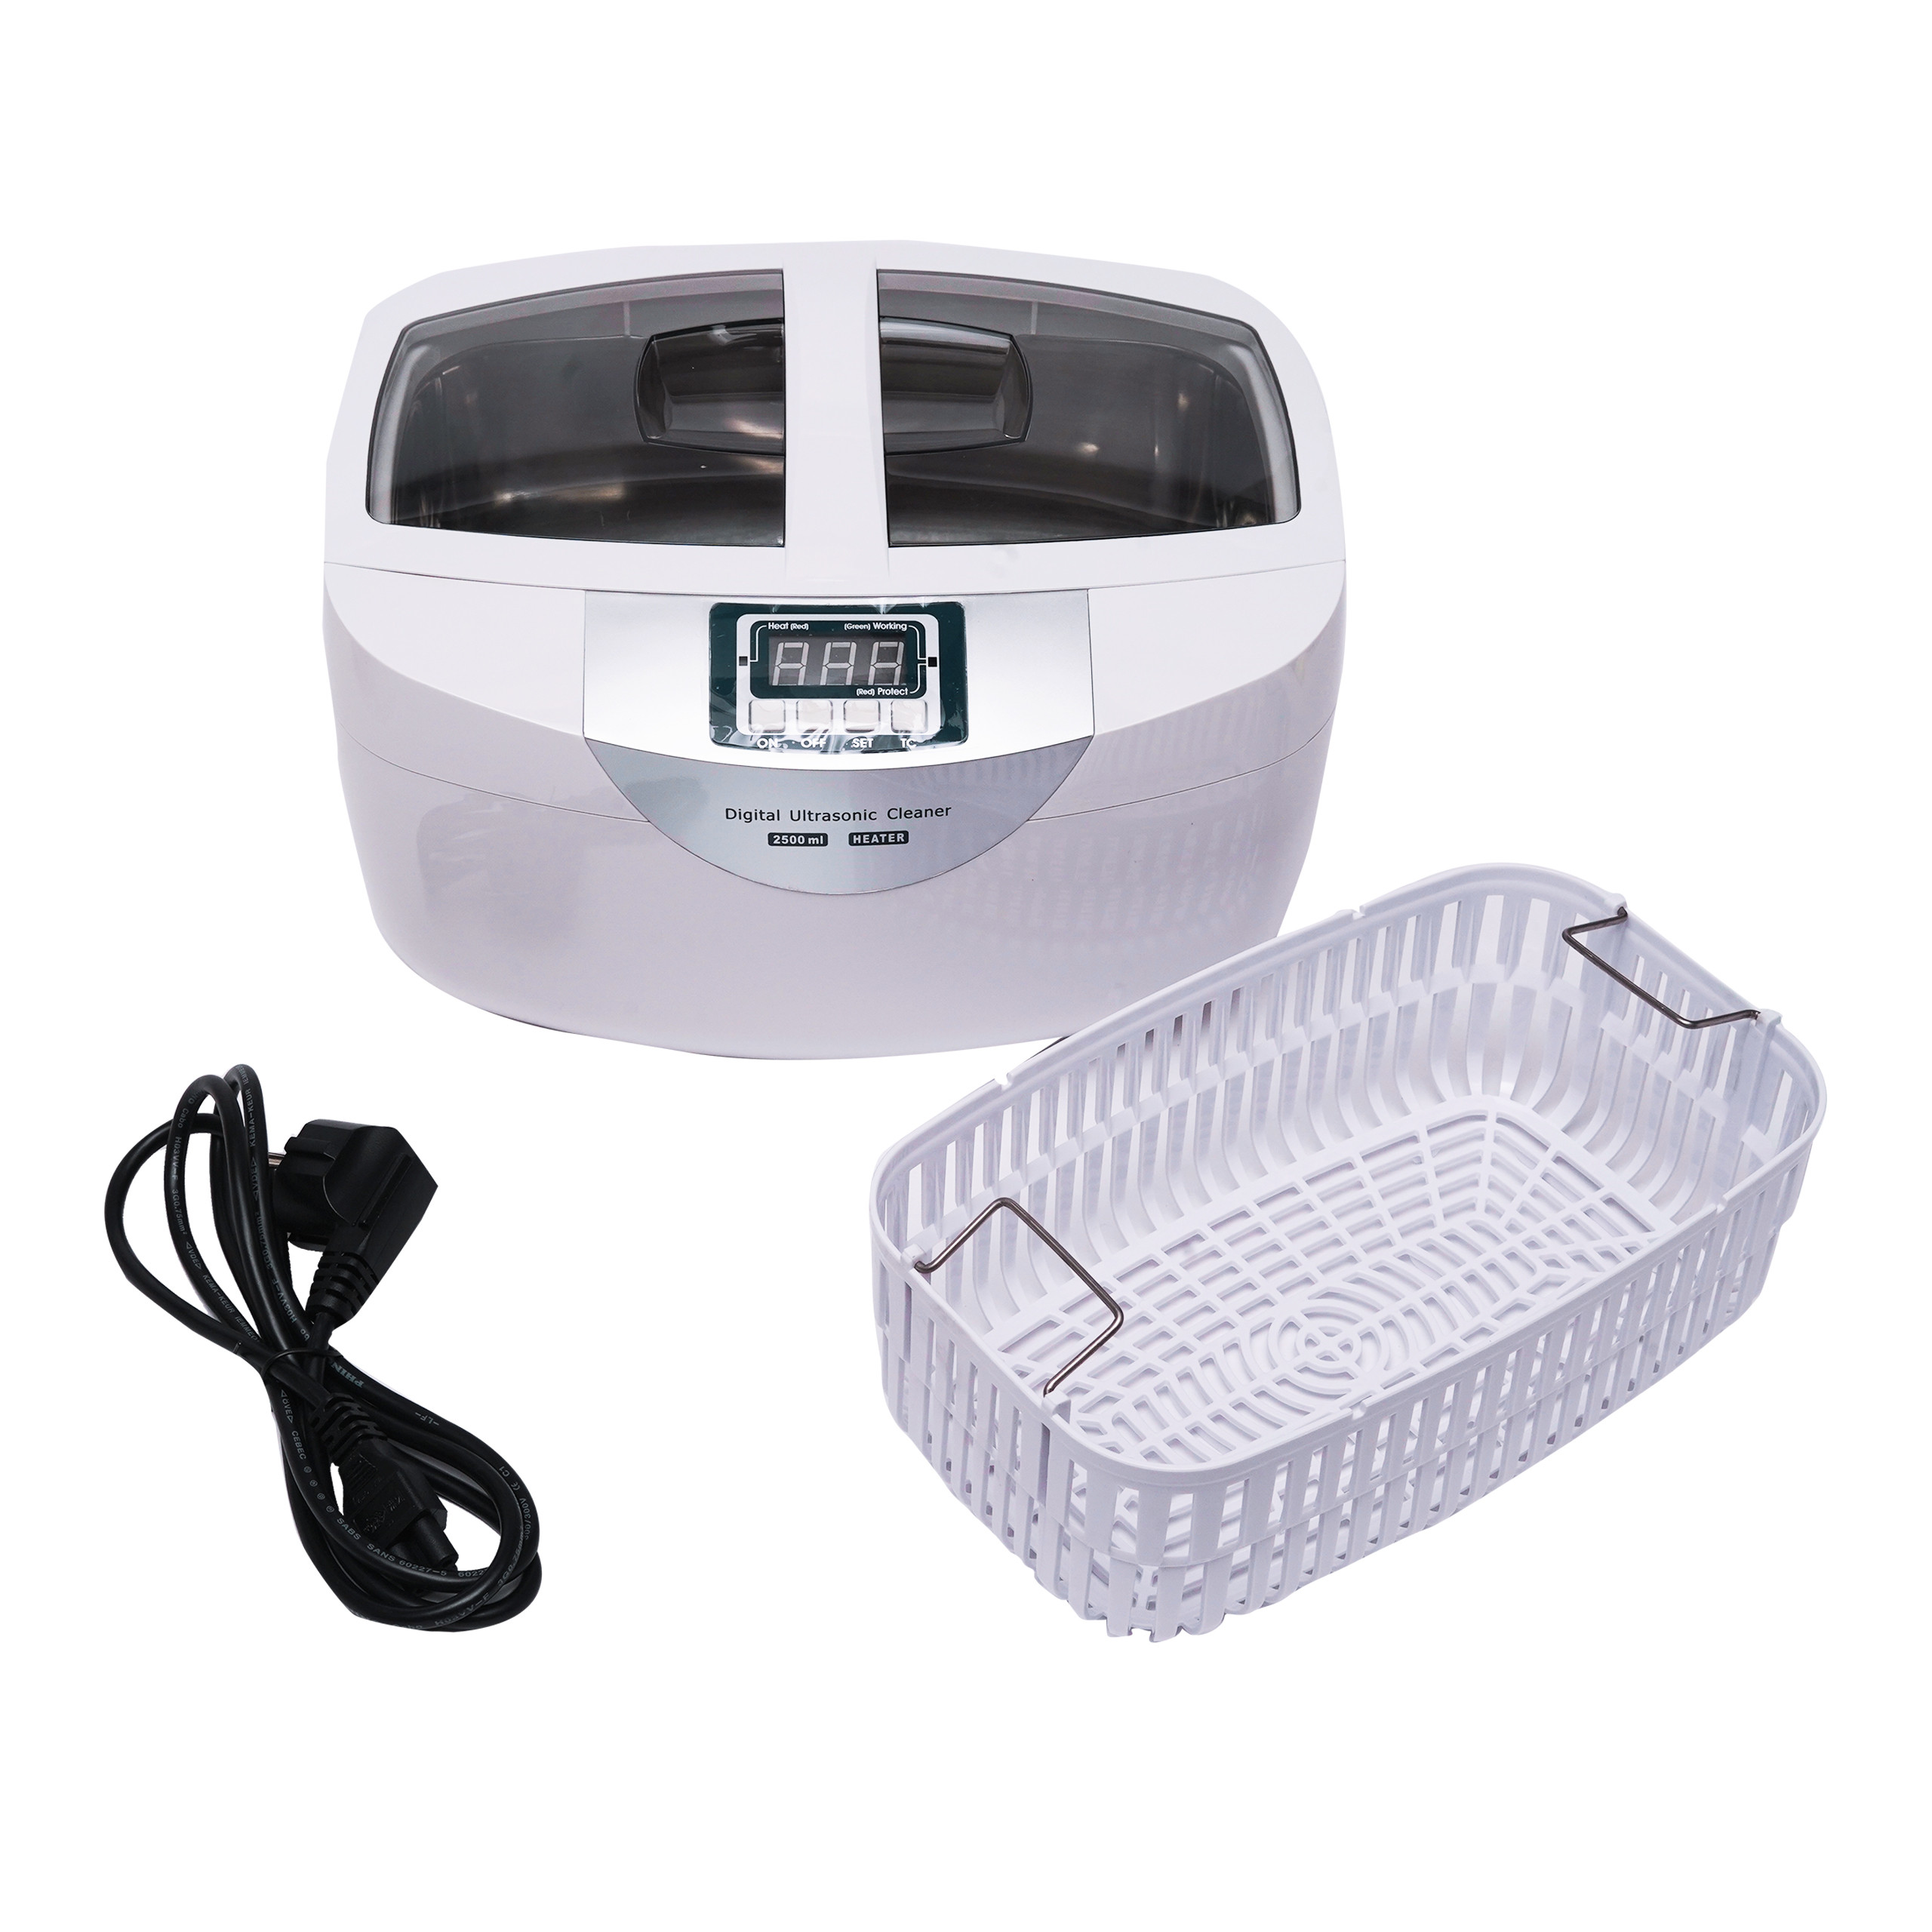 Digital Ultrasonic Cleaner(Heater Function)